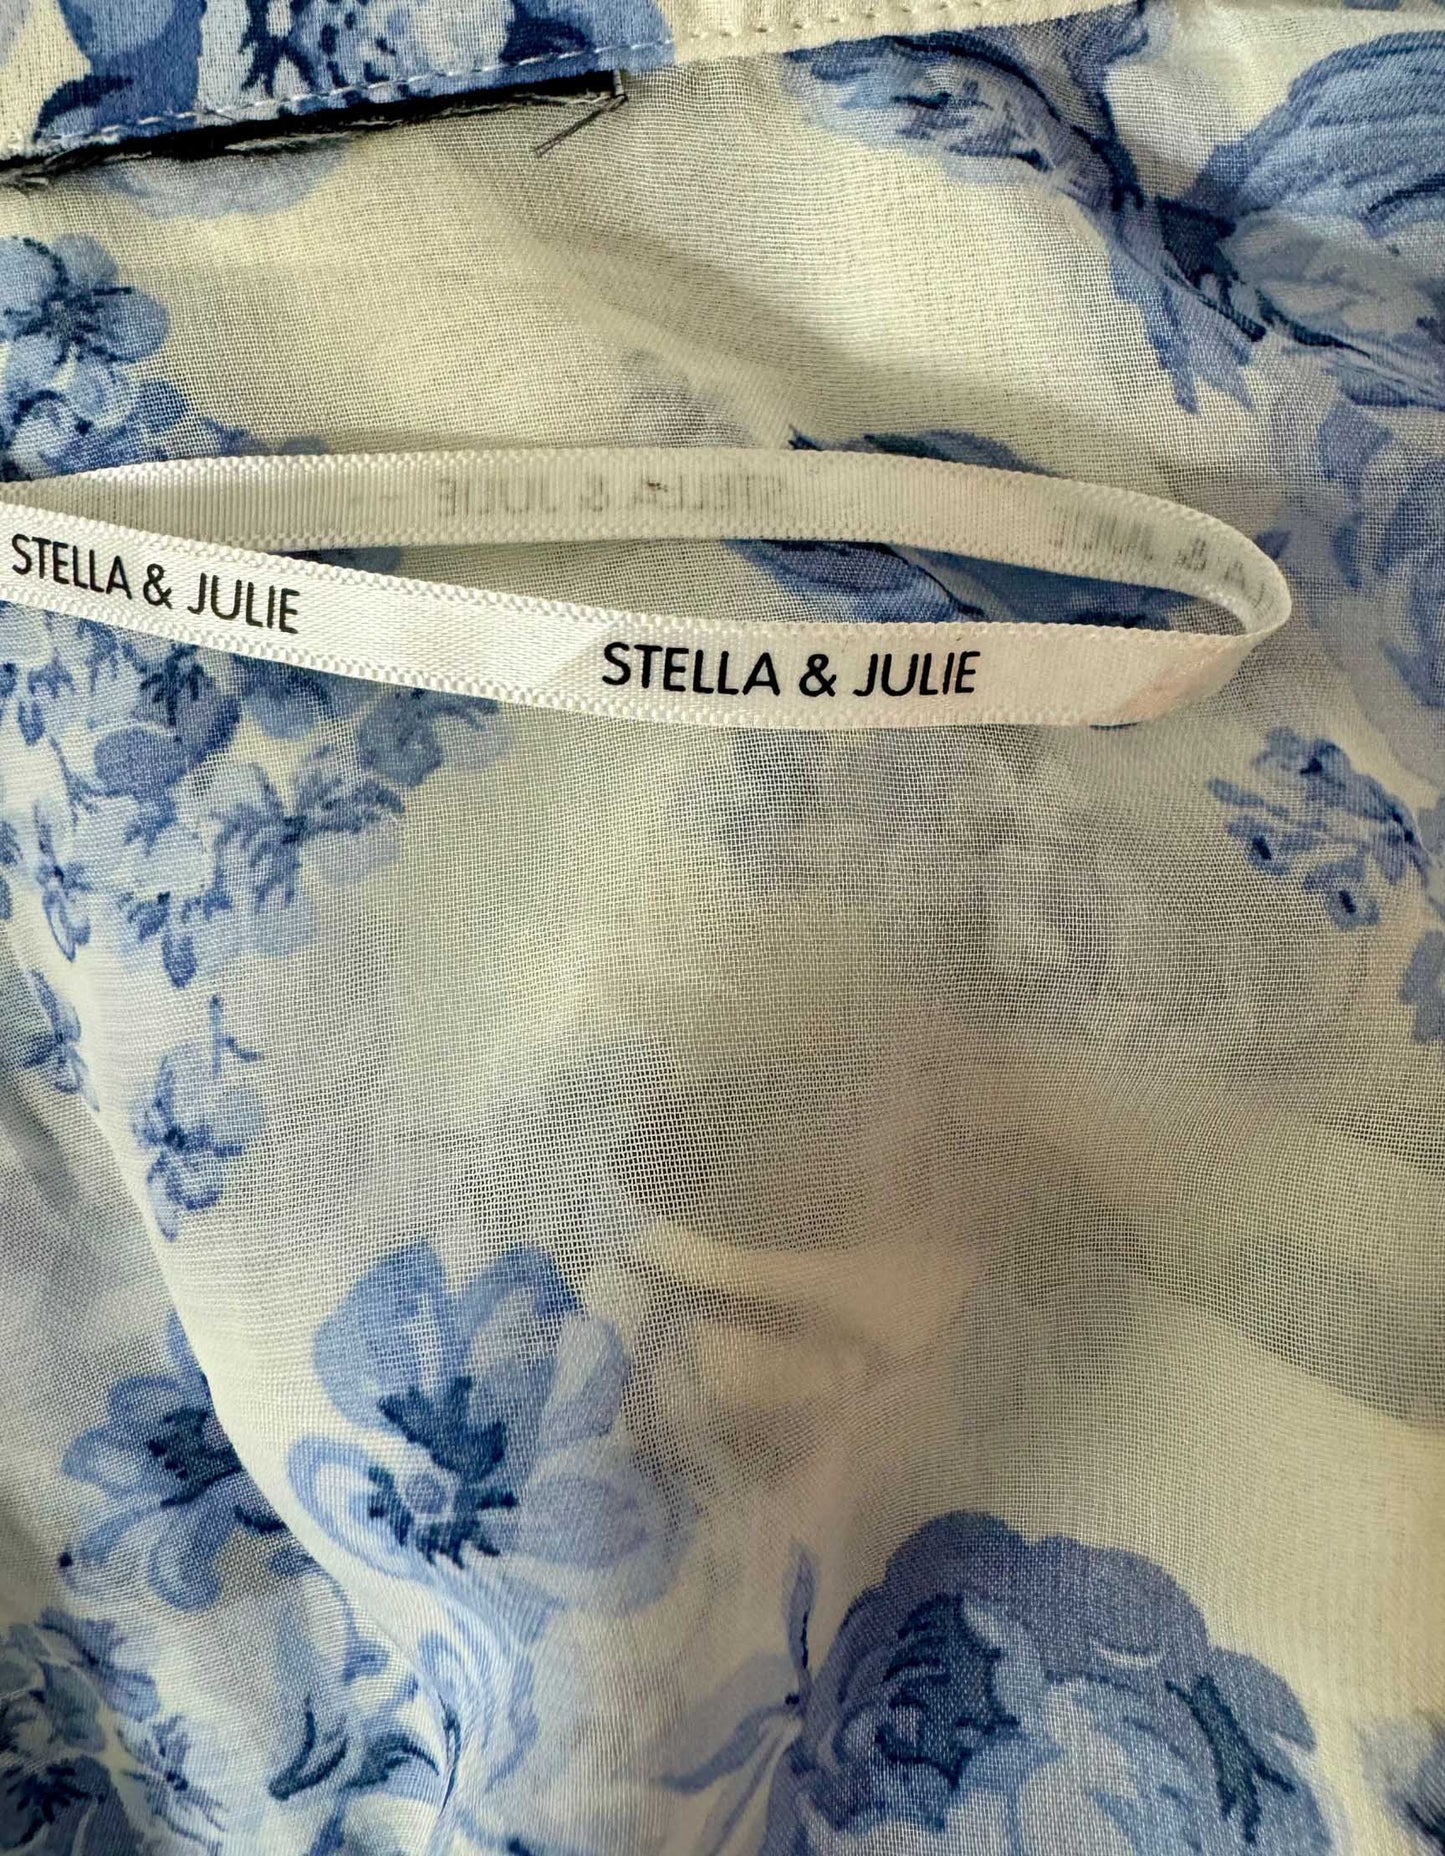 STELLA & JULIE Floral Dress - 2X US